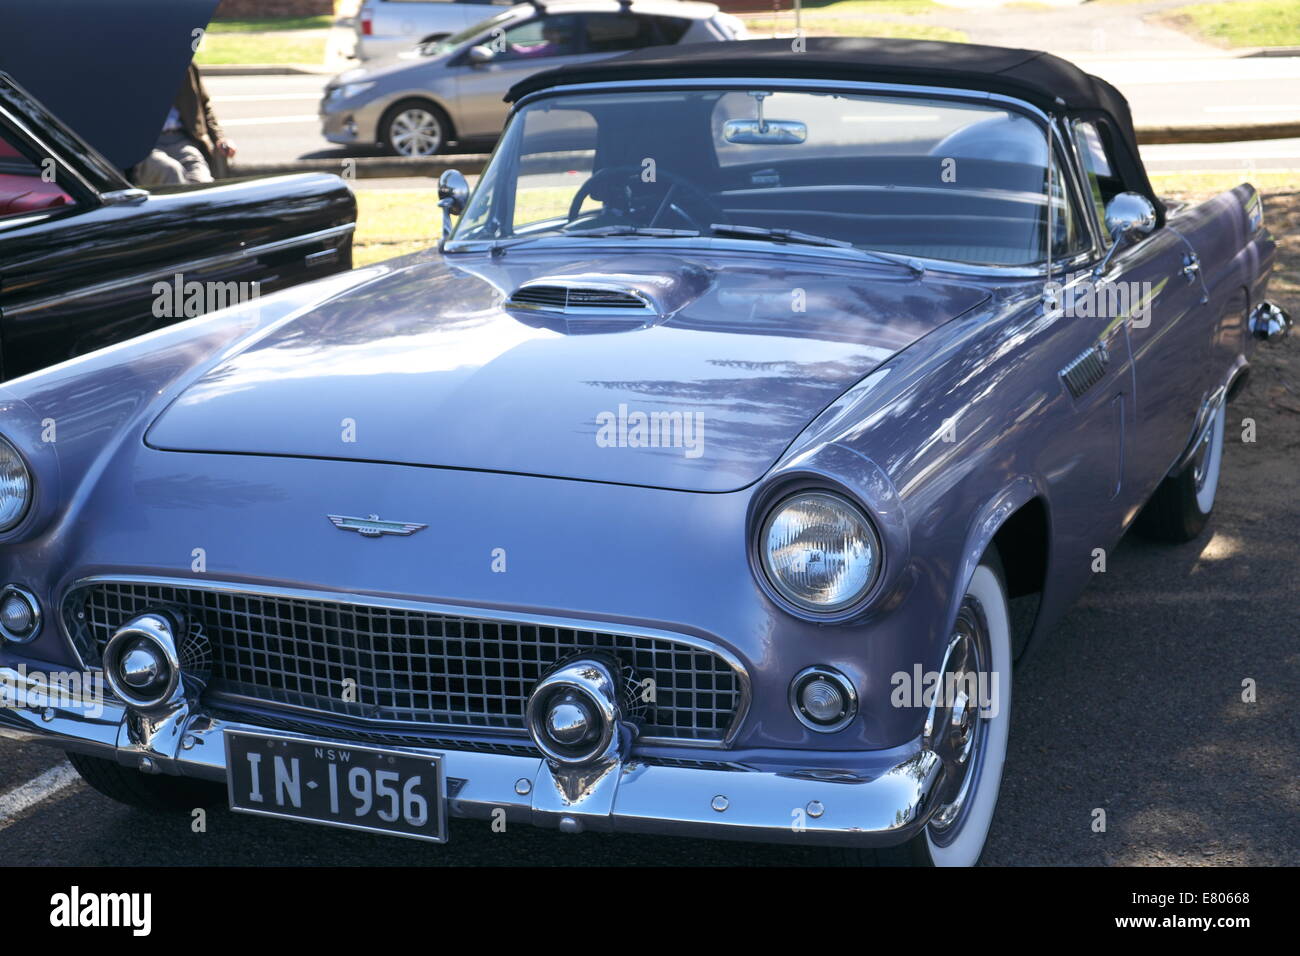 Newport Beach, Sydney, Australia. 27th Sep, 2014. Classic cars on display at Sydney's Newport Beach. Here a classic Ford Thunderbird. Credit:  martin berry/Alamy Live News Stock Photo